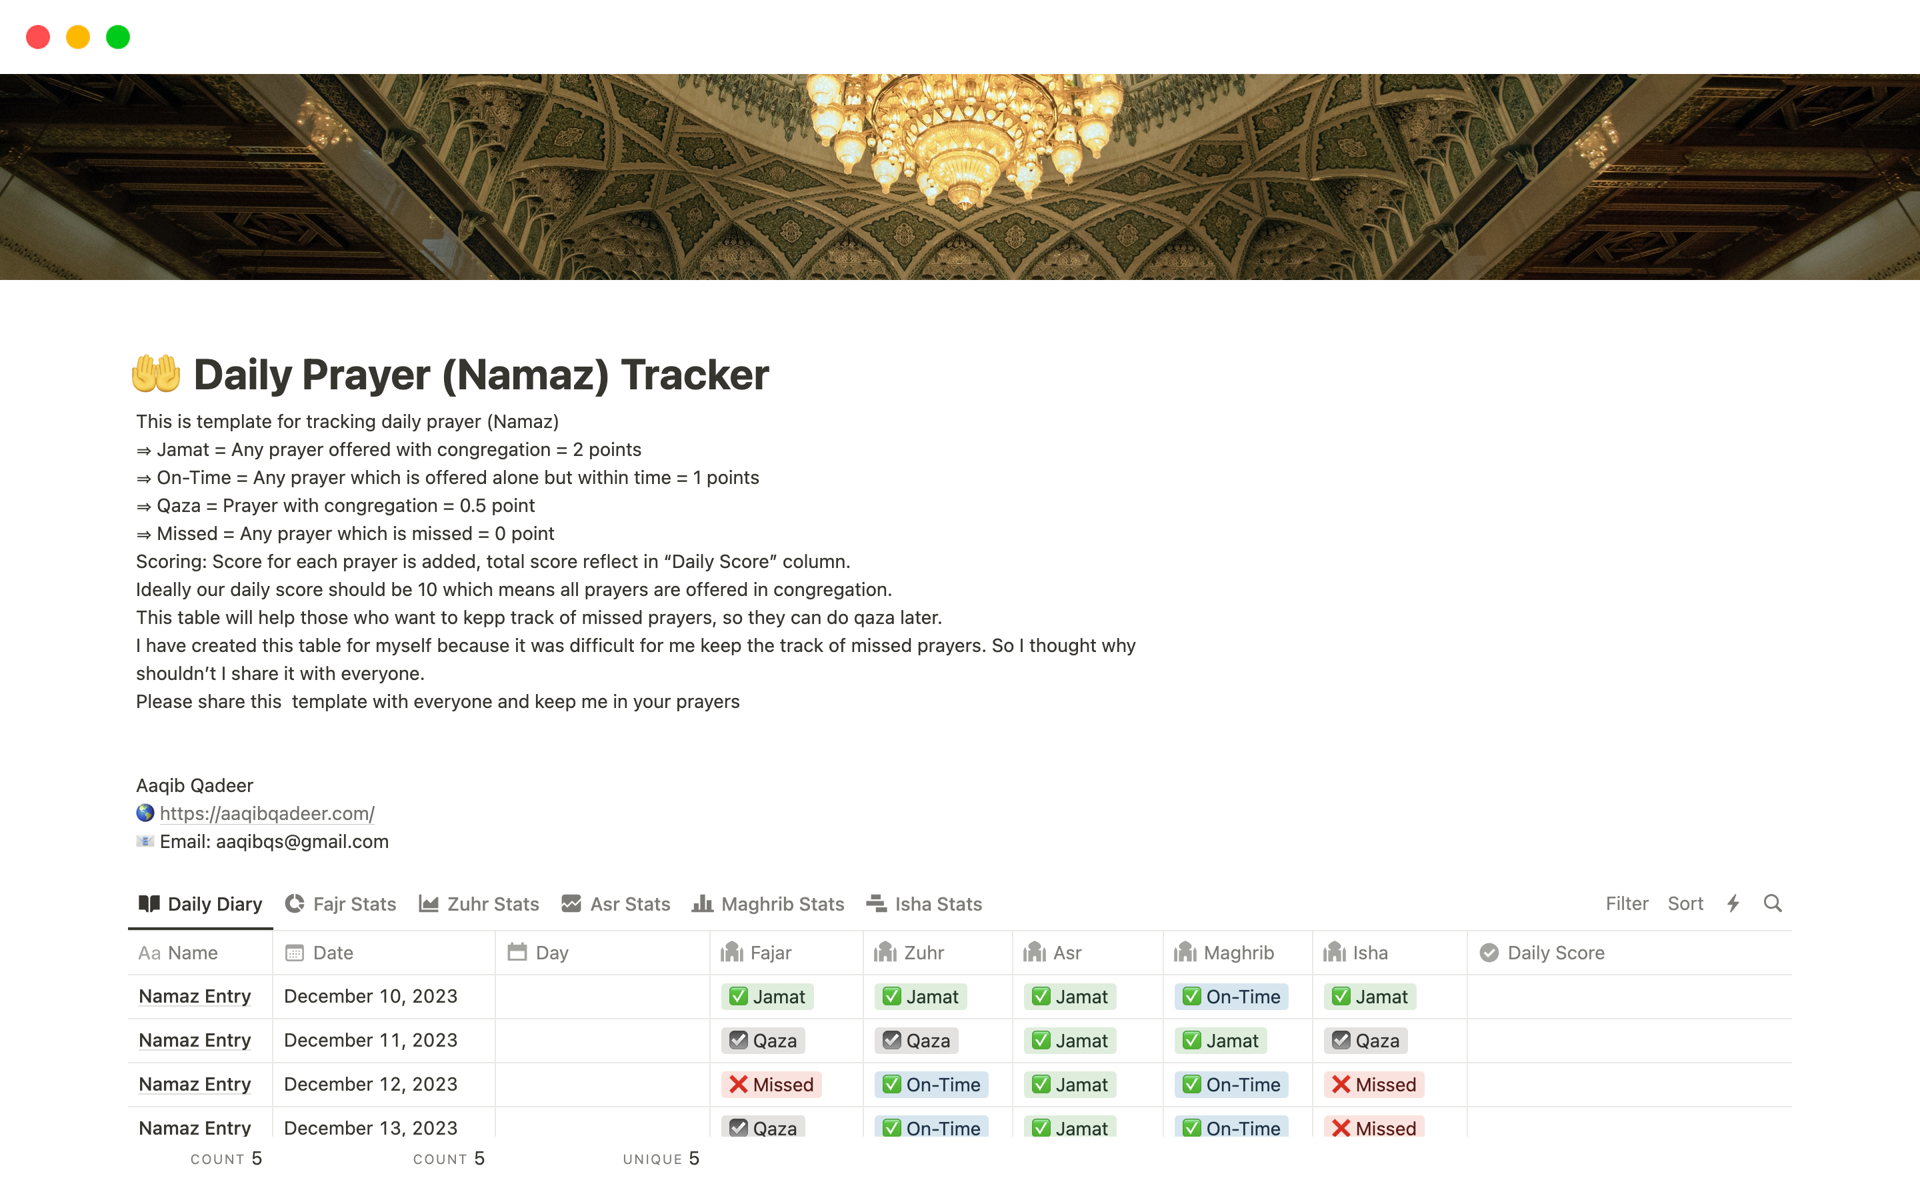 Aperçu du modèle de Daily Prayer (Namaz) Tracker